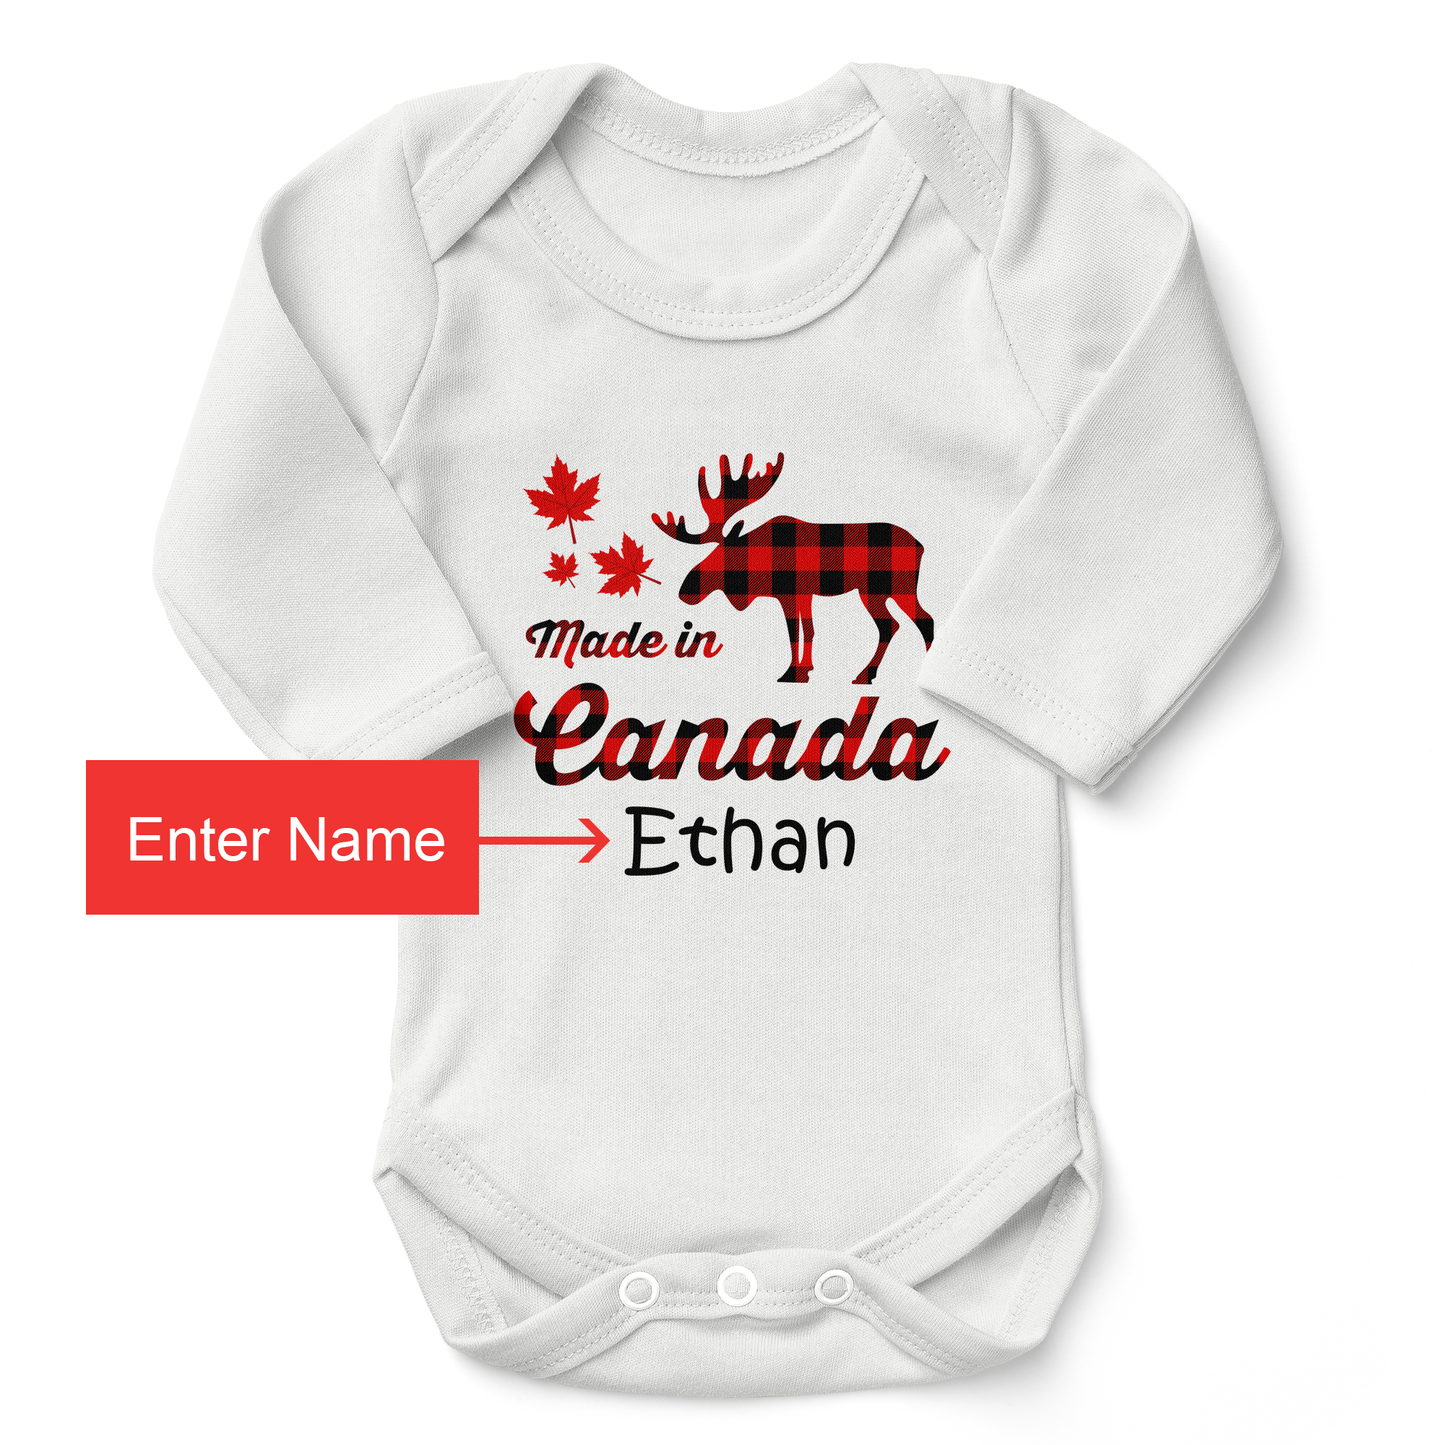 Zeronto Baby Gift Basket - Born In Canada